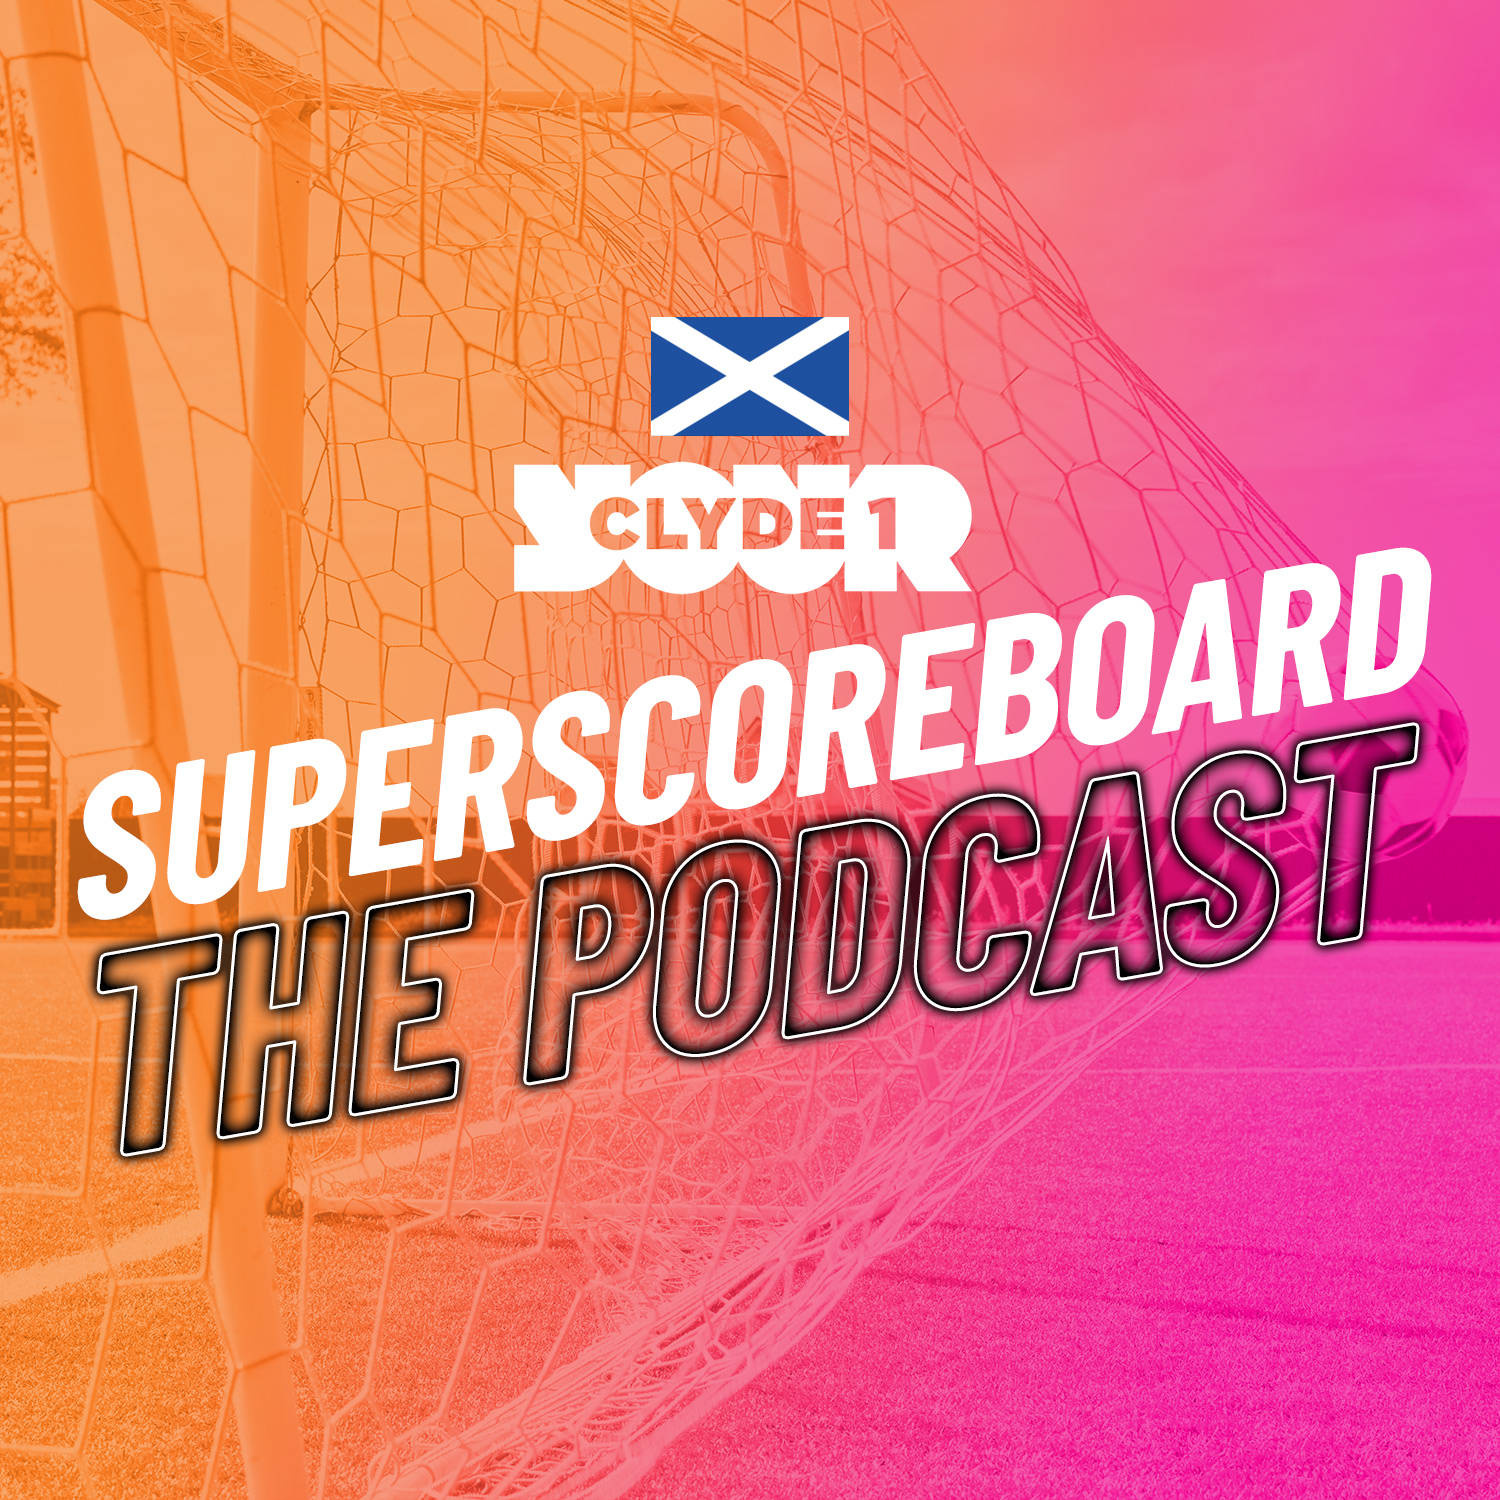 Saturday 25th November Clyde 1 Superscoreboard Part 2